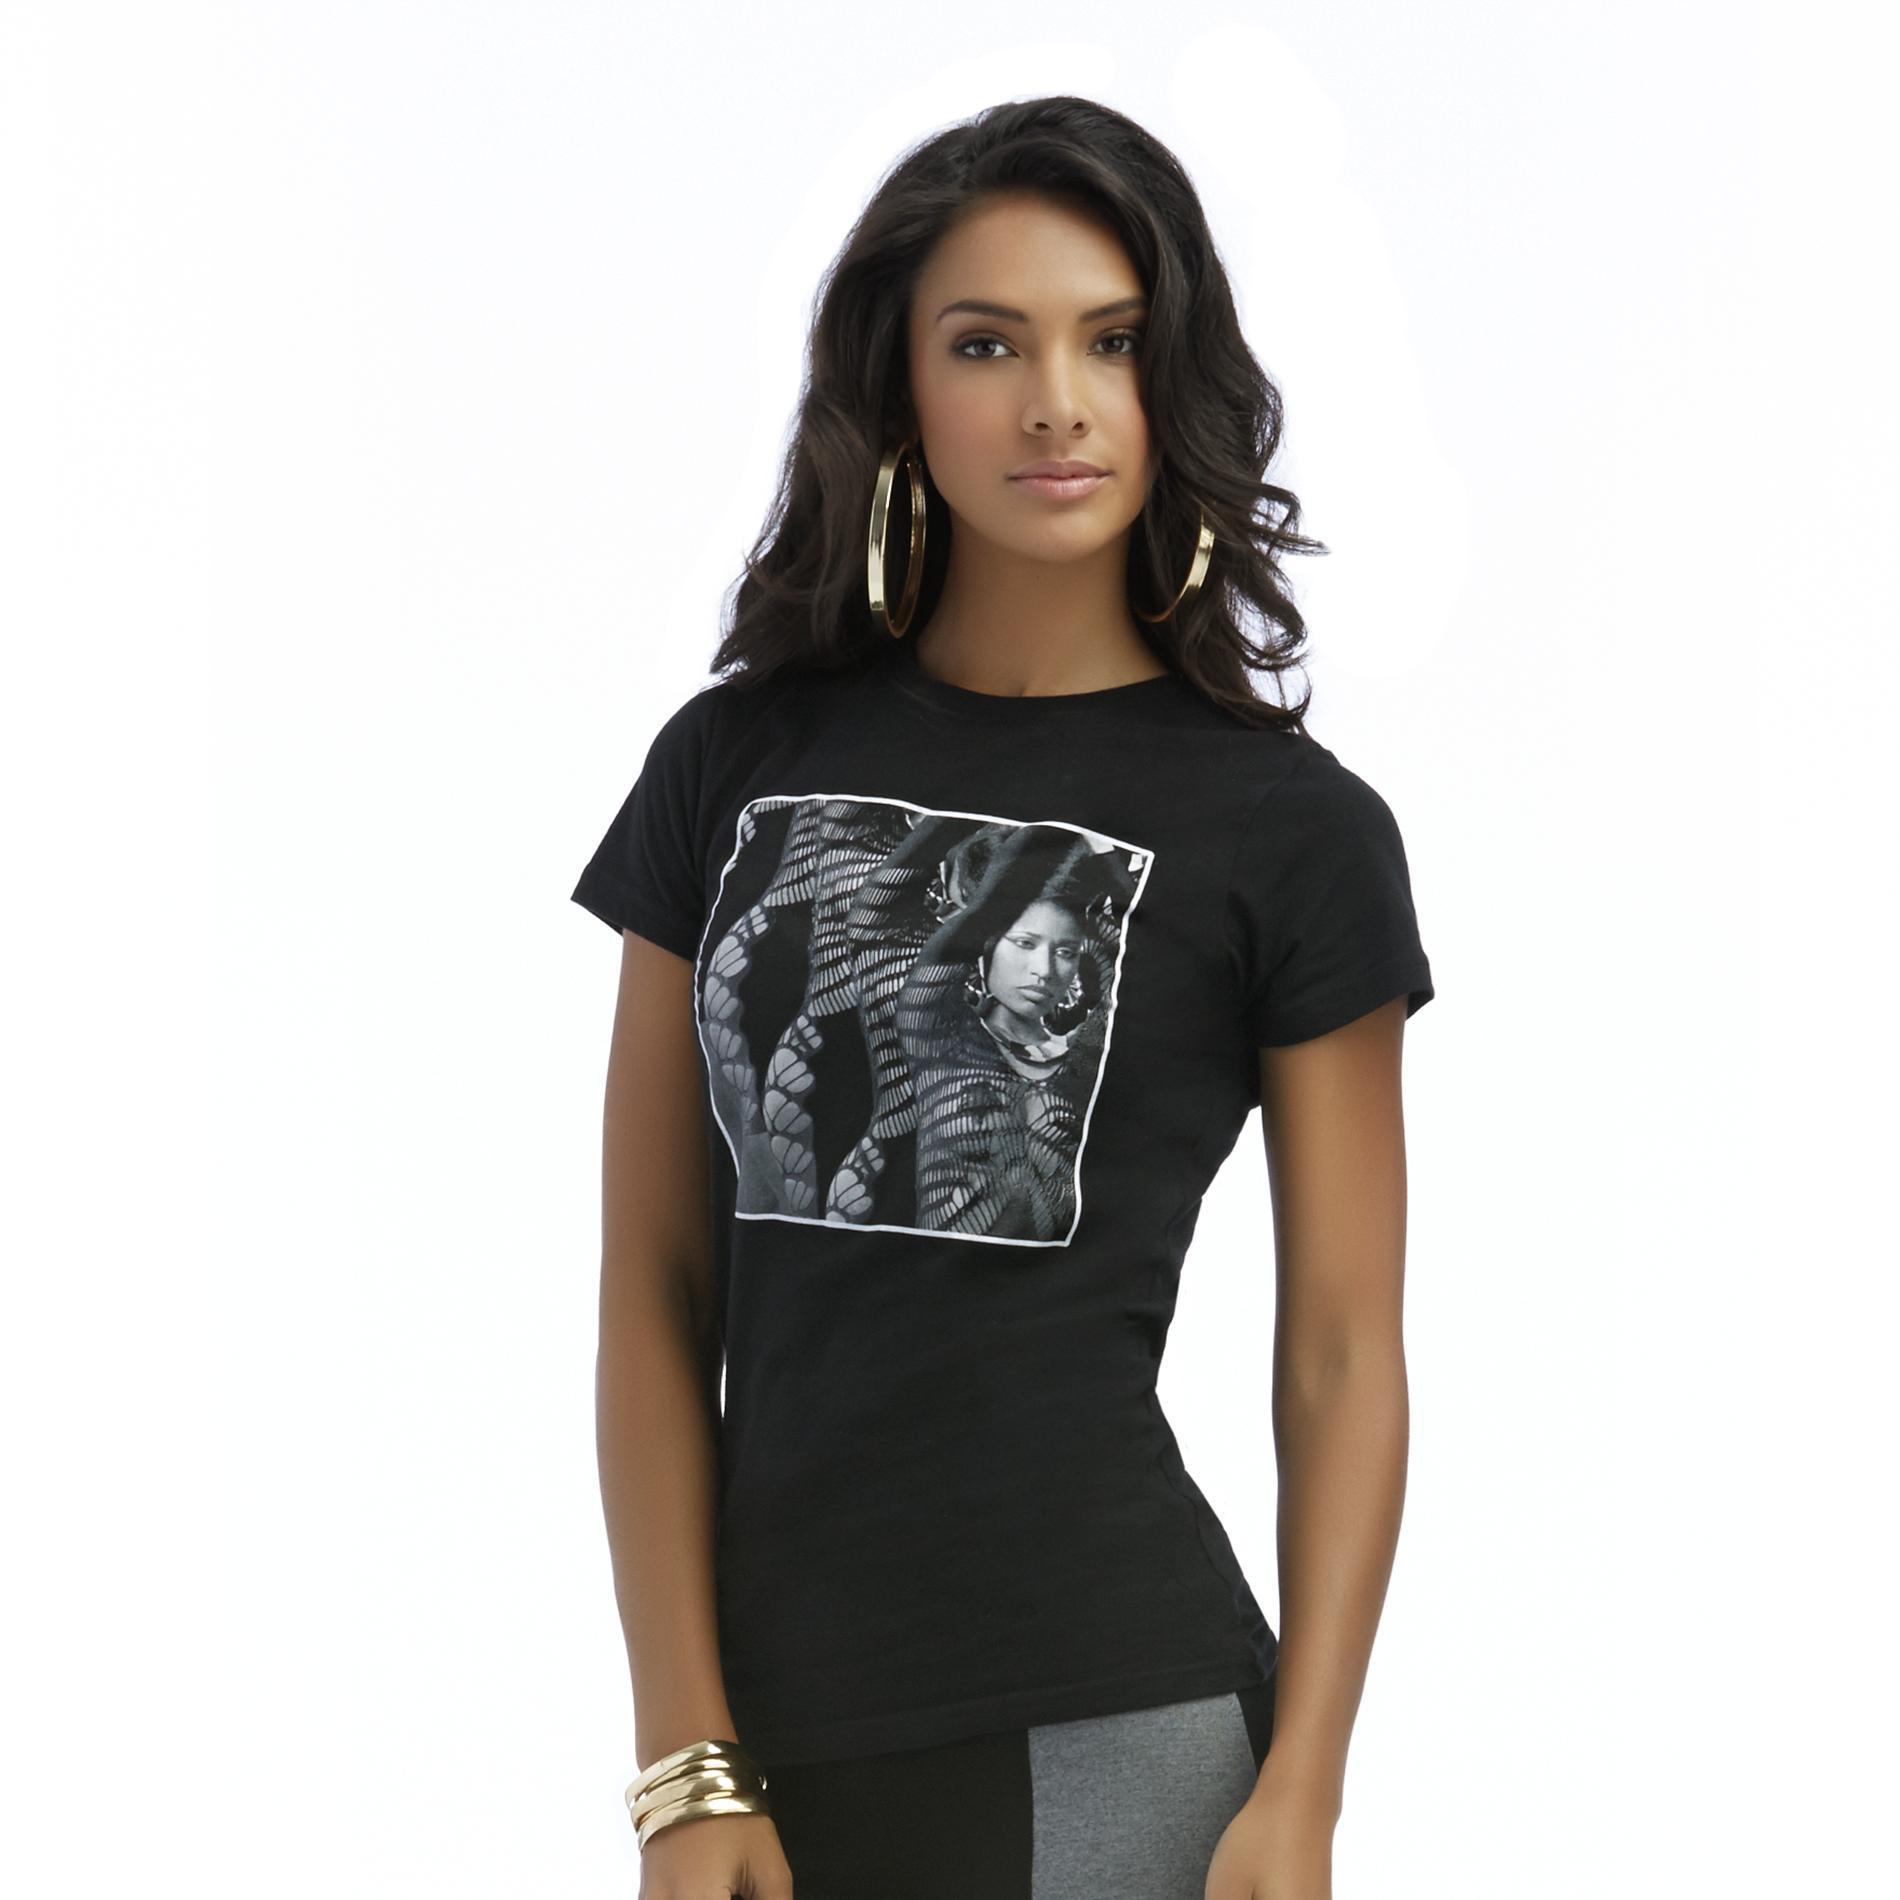 Nicki Minaj Women's Graphic T-Shirt - Abstract